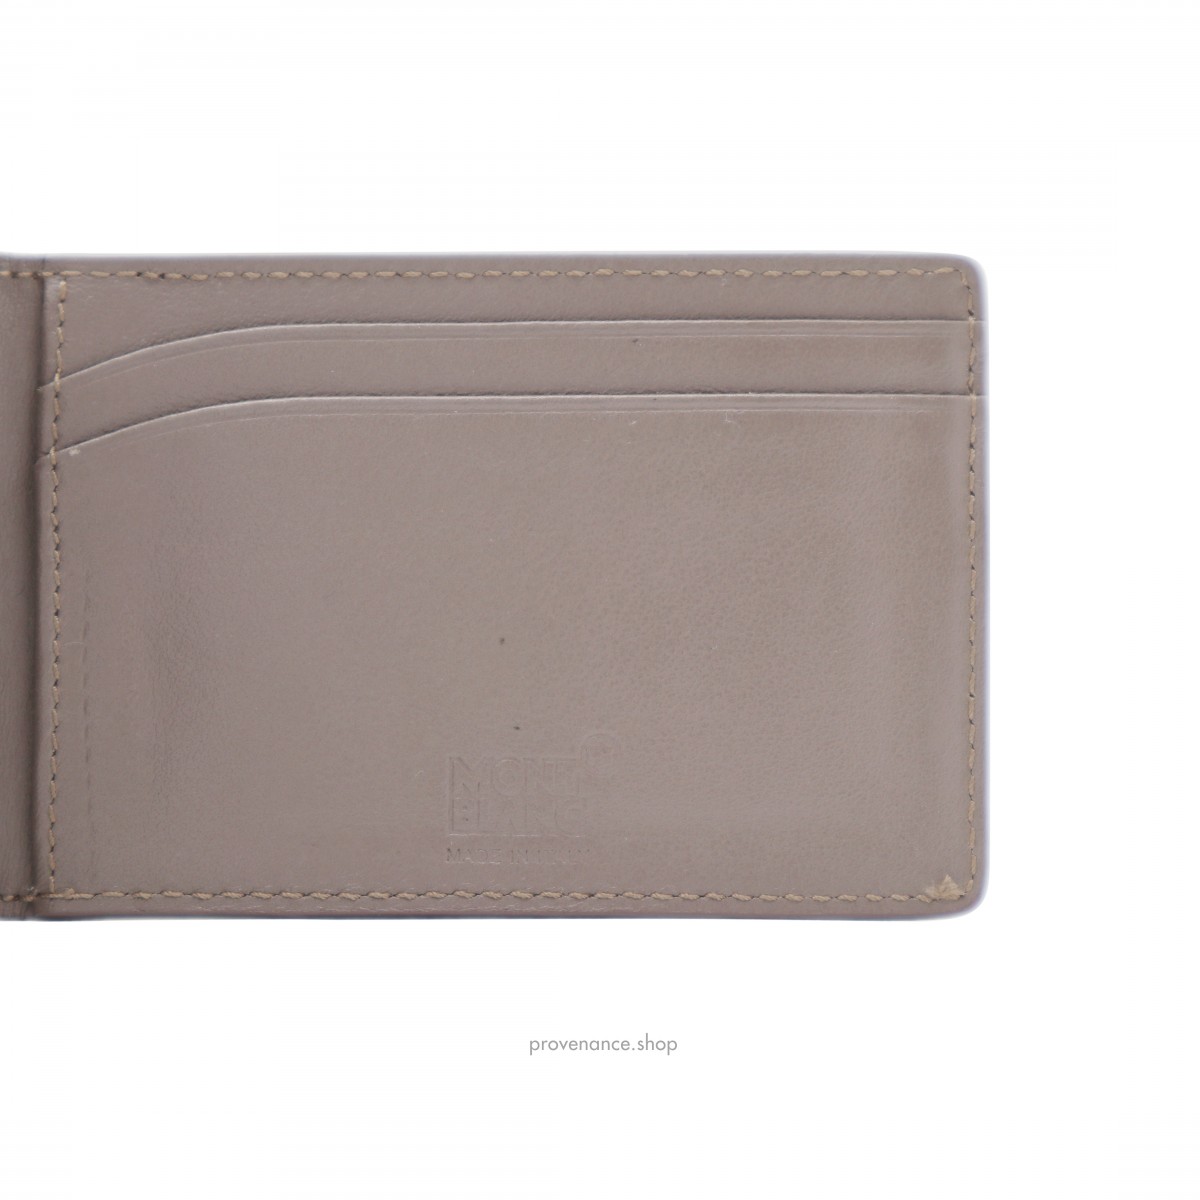 MontBlanc MEISTERSTUCK Cardholder Wallet - Taupe - 5